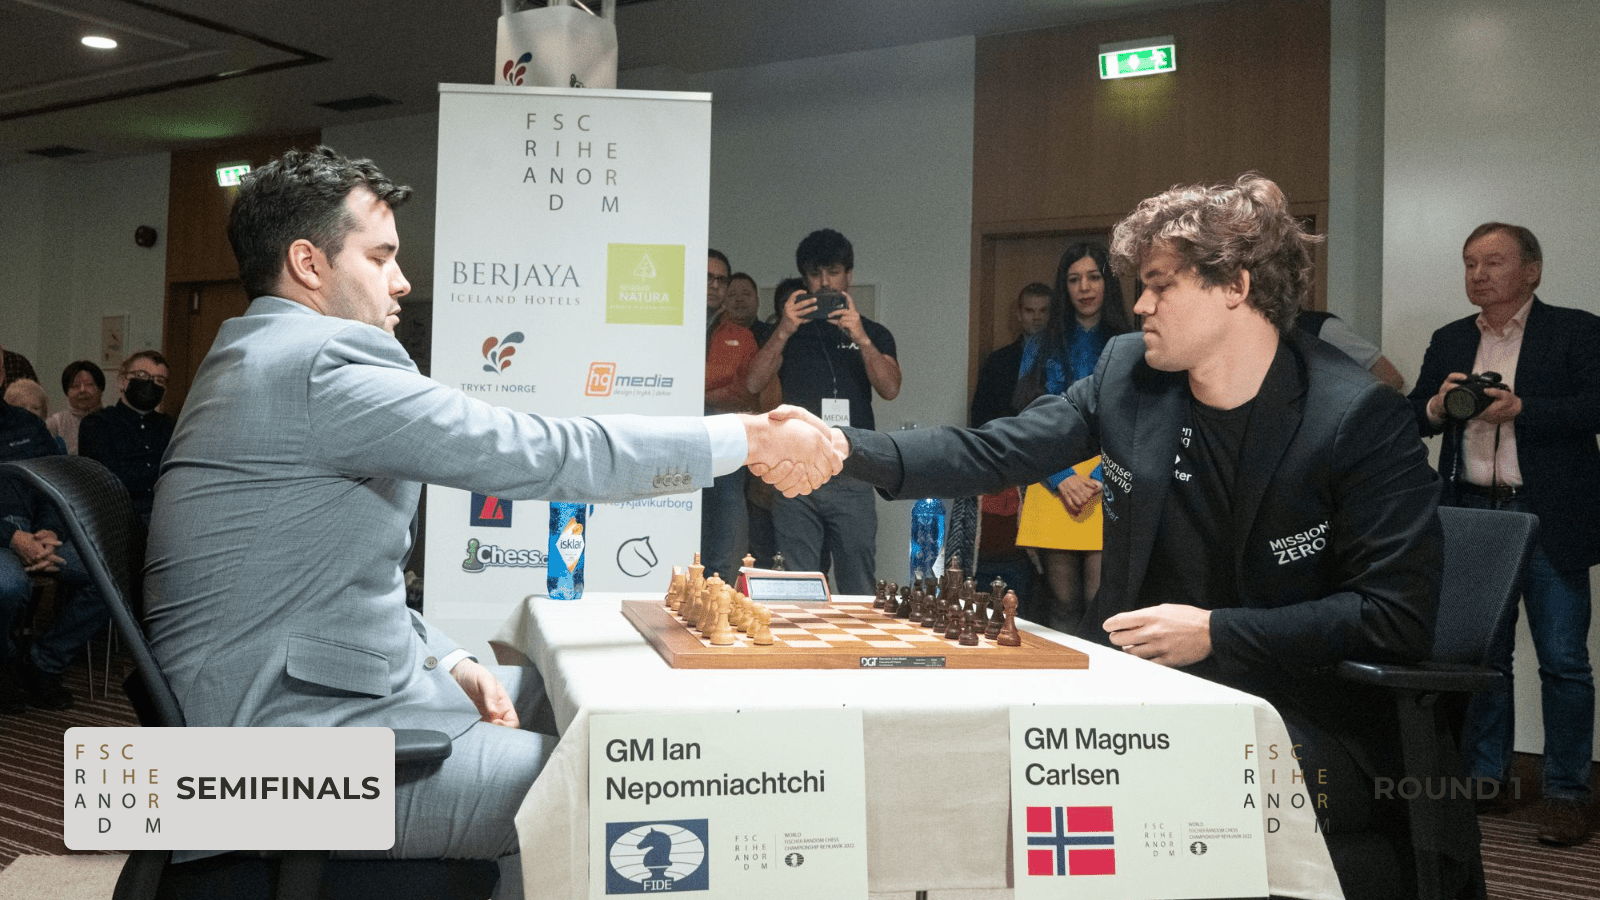 Anunciamos o Campeonato Mundial de Xadrez Fischer Random da FIDE 2022 